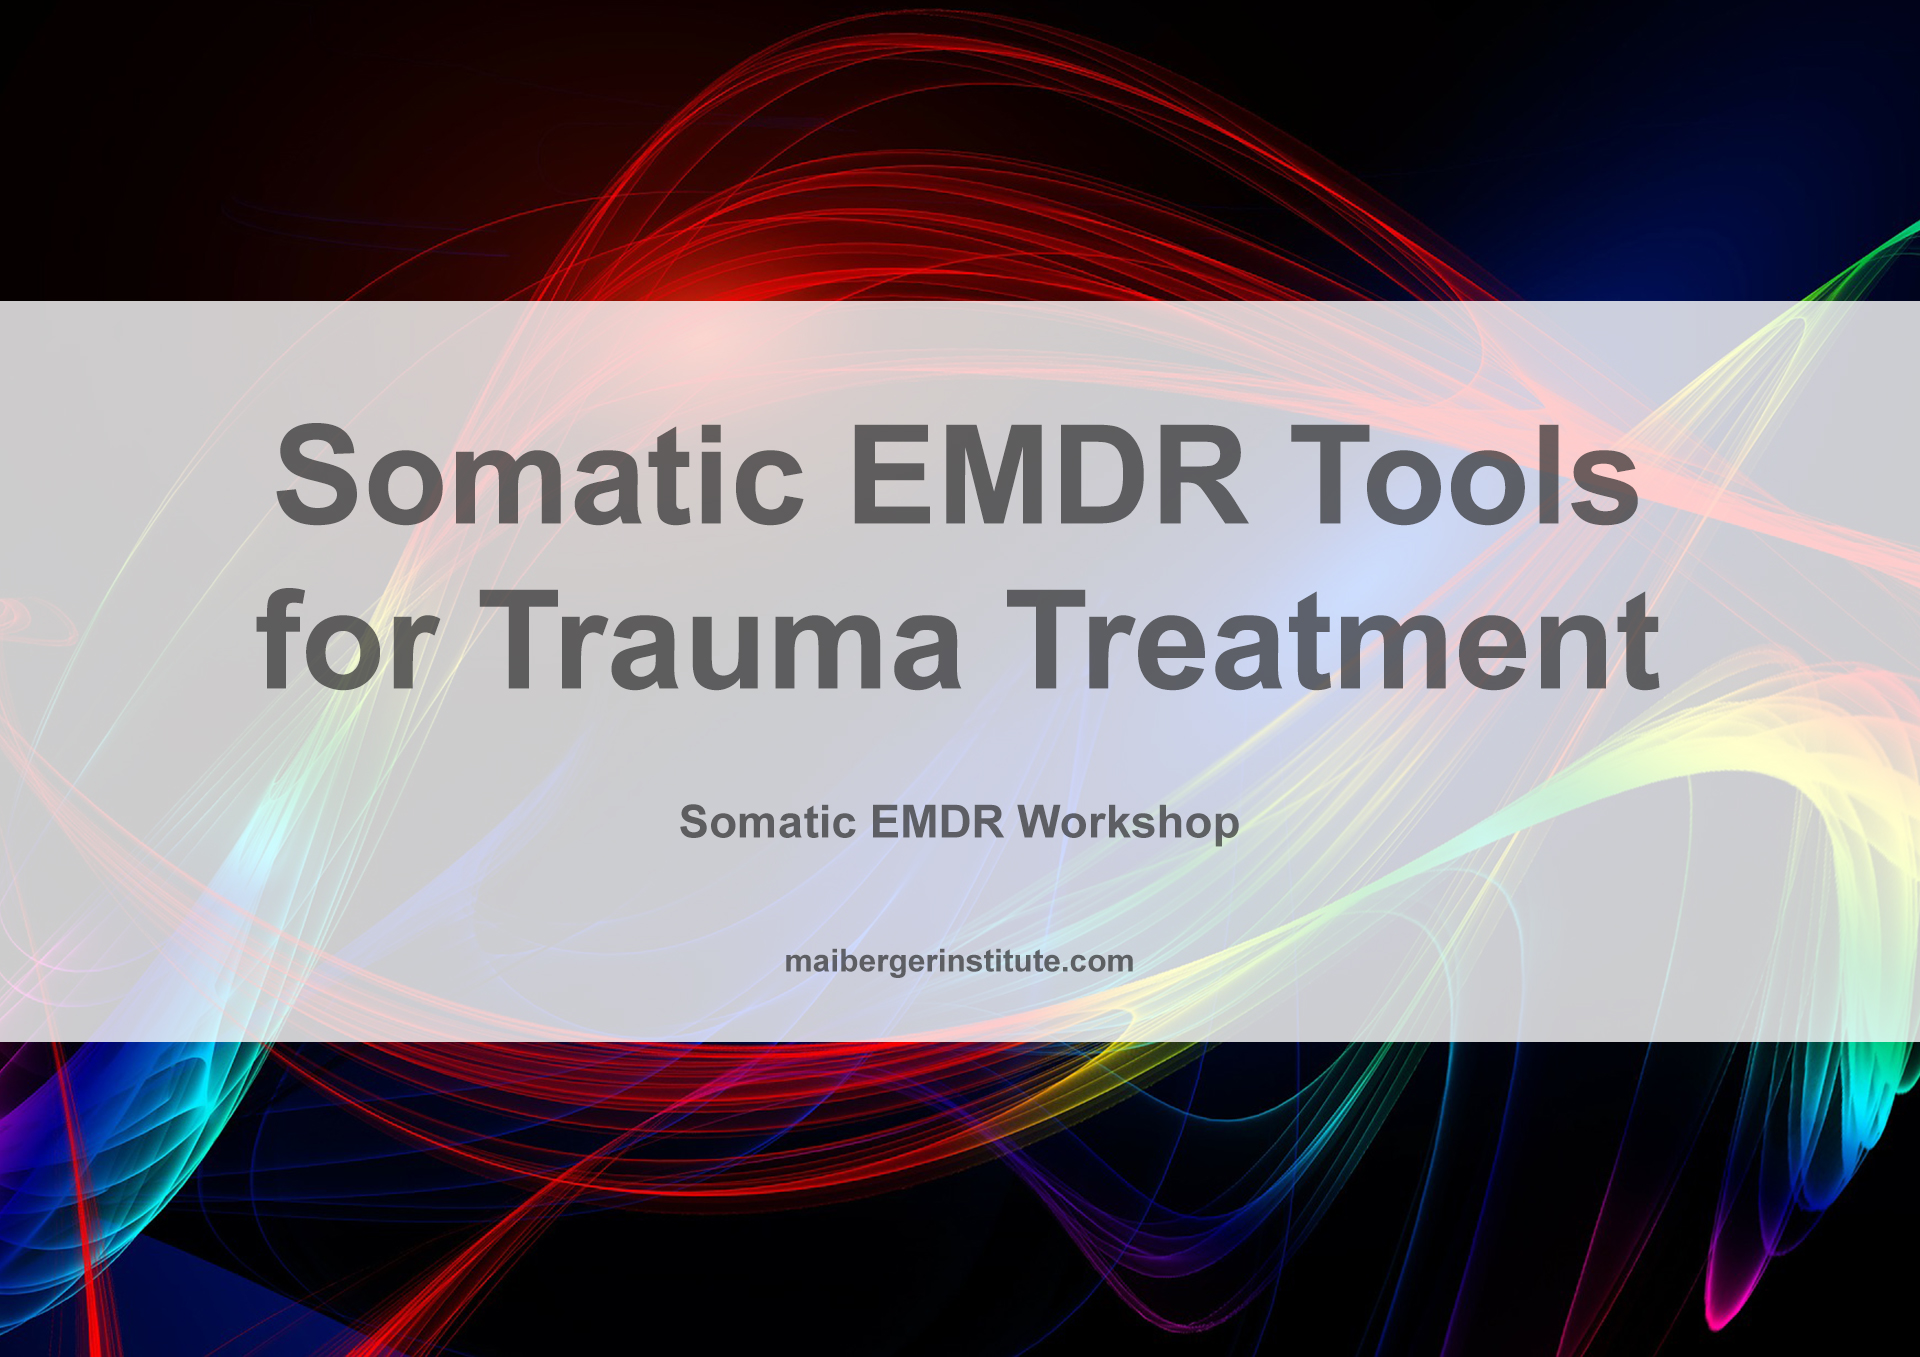 Somatic EMDR Workshops - Somatic EMDR Tools for Trauma Treatment